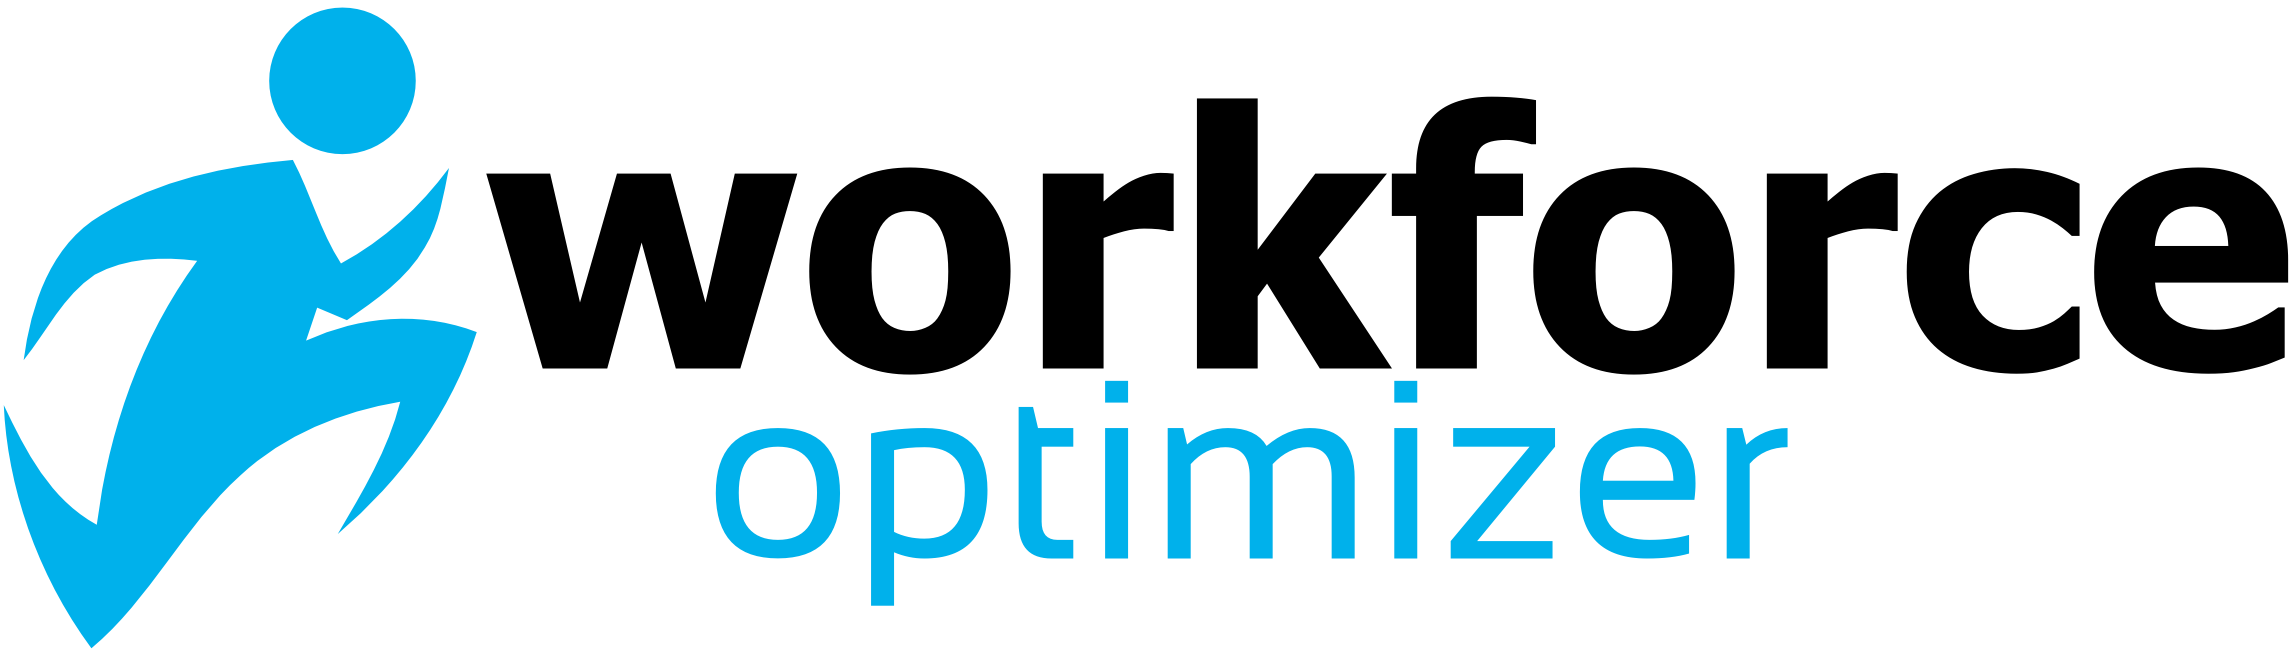 Workforce Optimizer Pte. Ltd. company logo